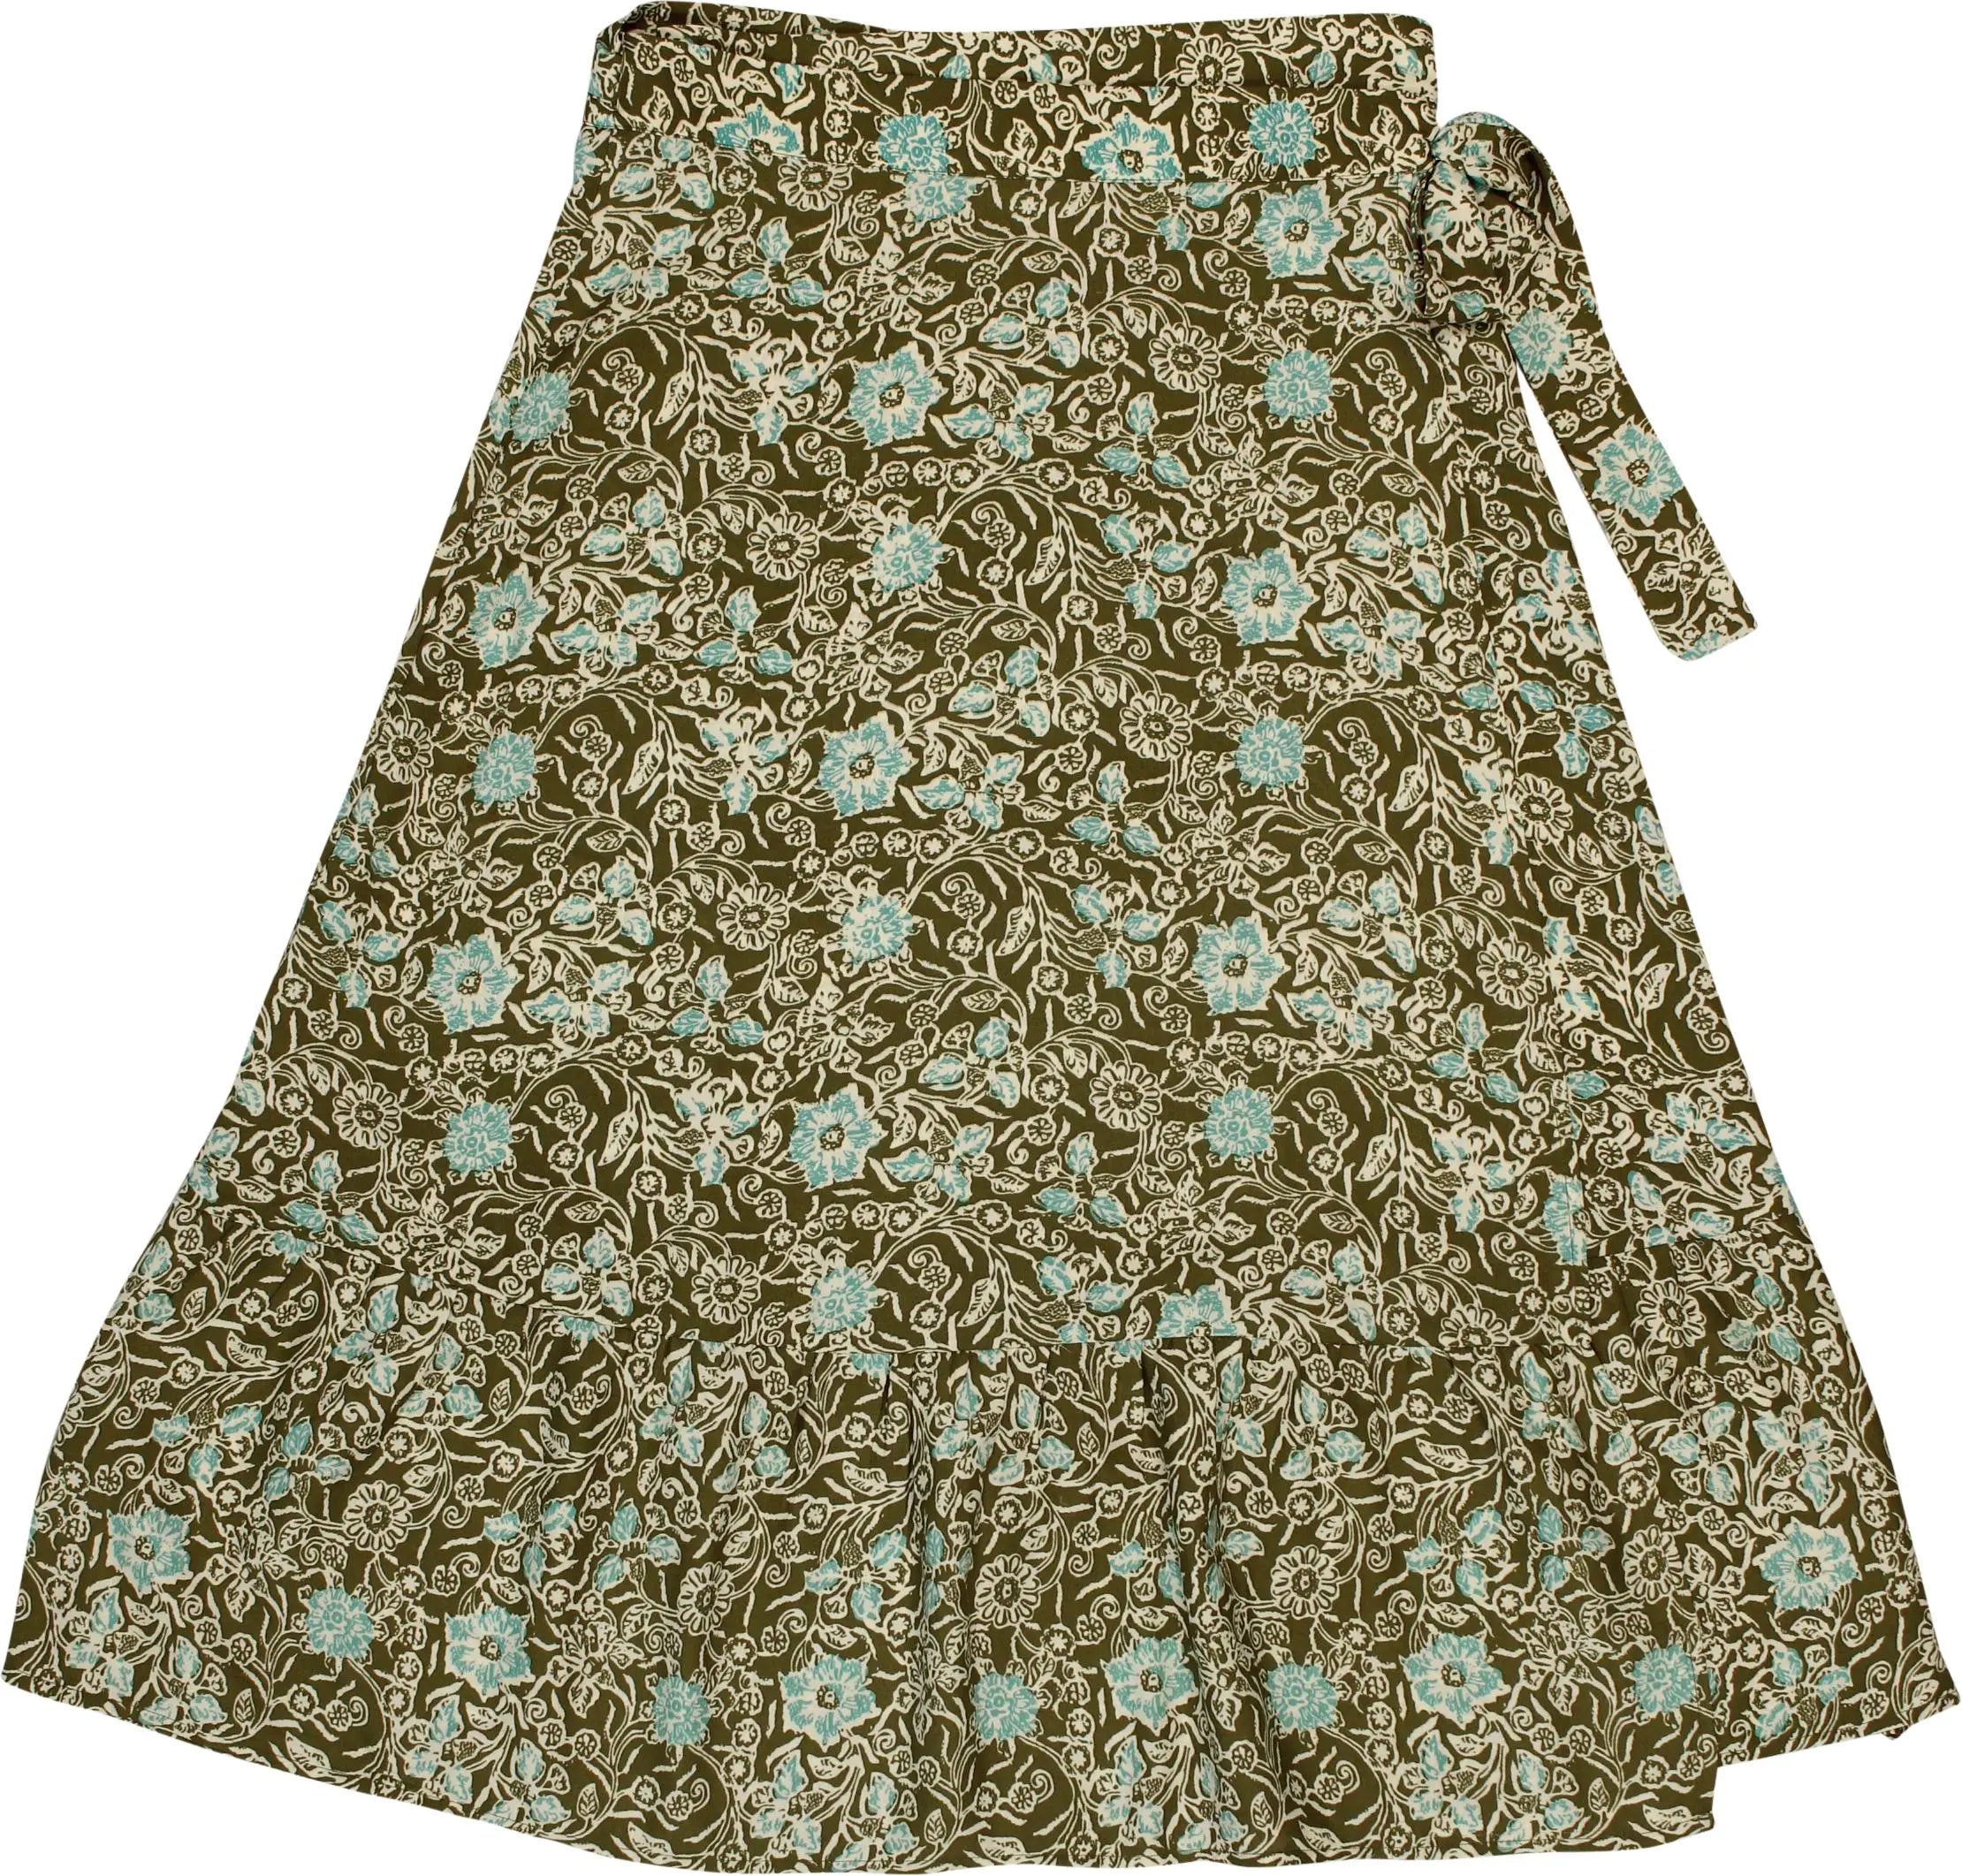 Indiska - Floral Wrap Skirt- ThriftTale.com - Vintage and second handclothing